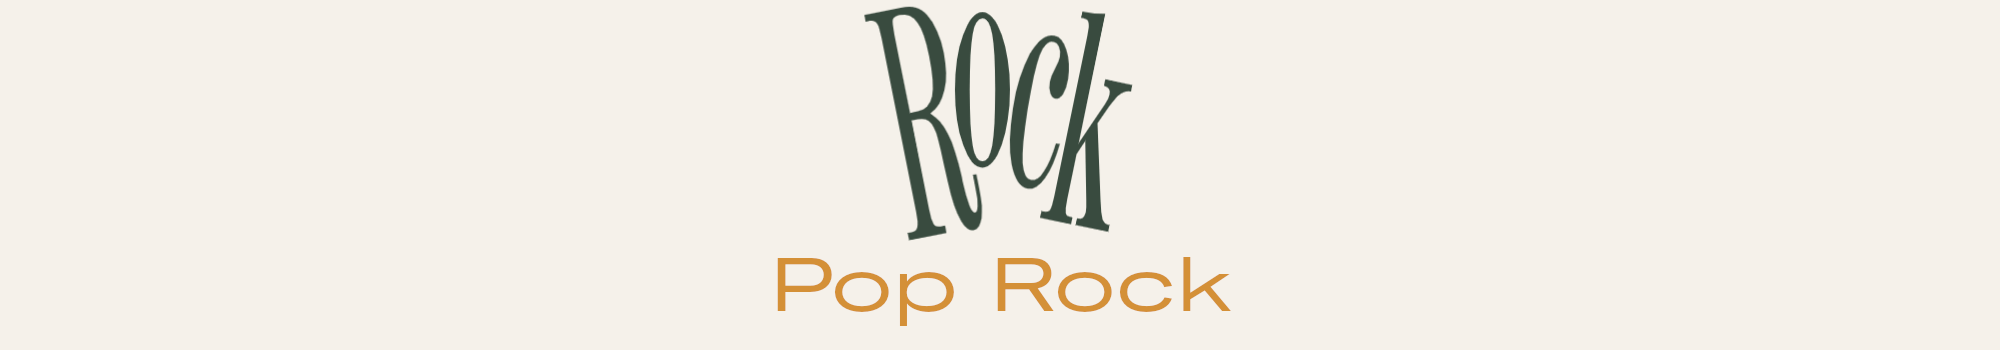 Rubrik till kategori: Rock - Pop Rock